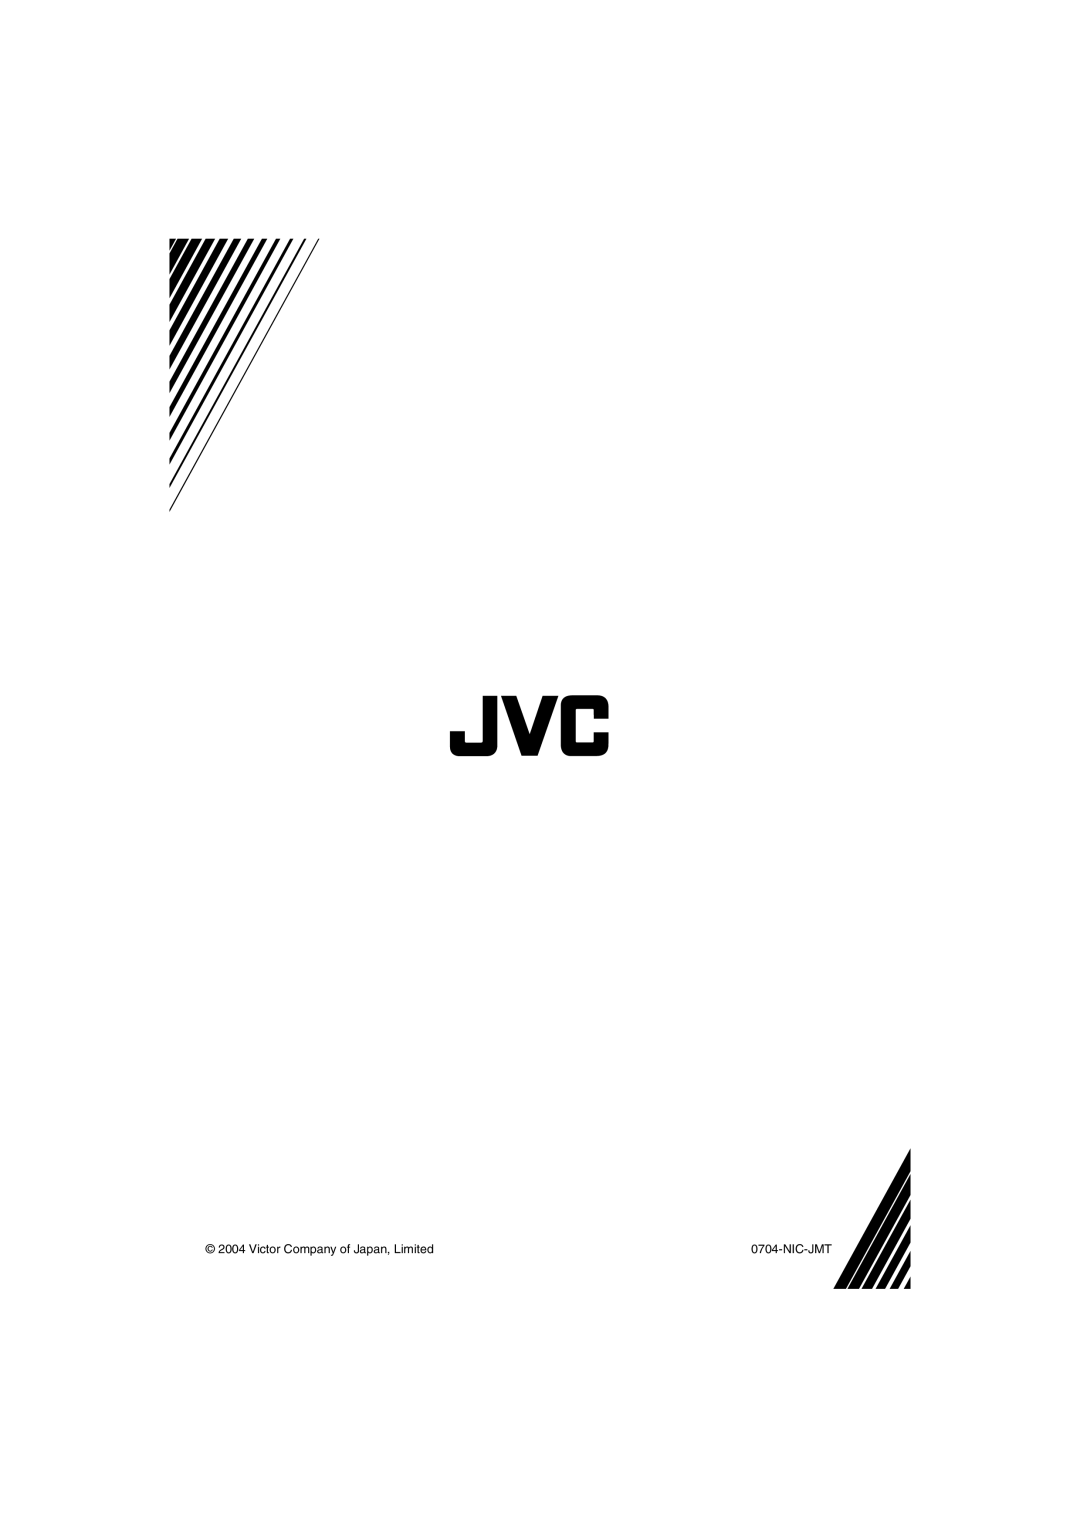 JVC AV-20NN14, AV-21YN14, AV-21CN14, AV-14FN14 specifications Victor Company of Japan, Limited, Nic-Jmt 